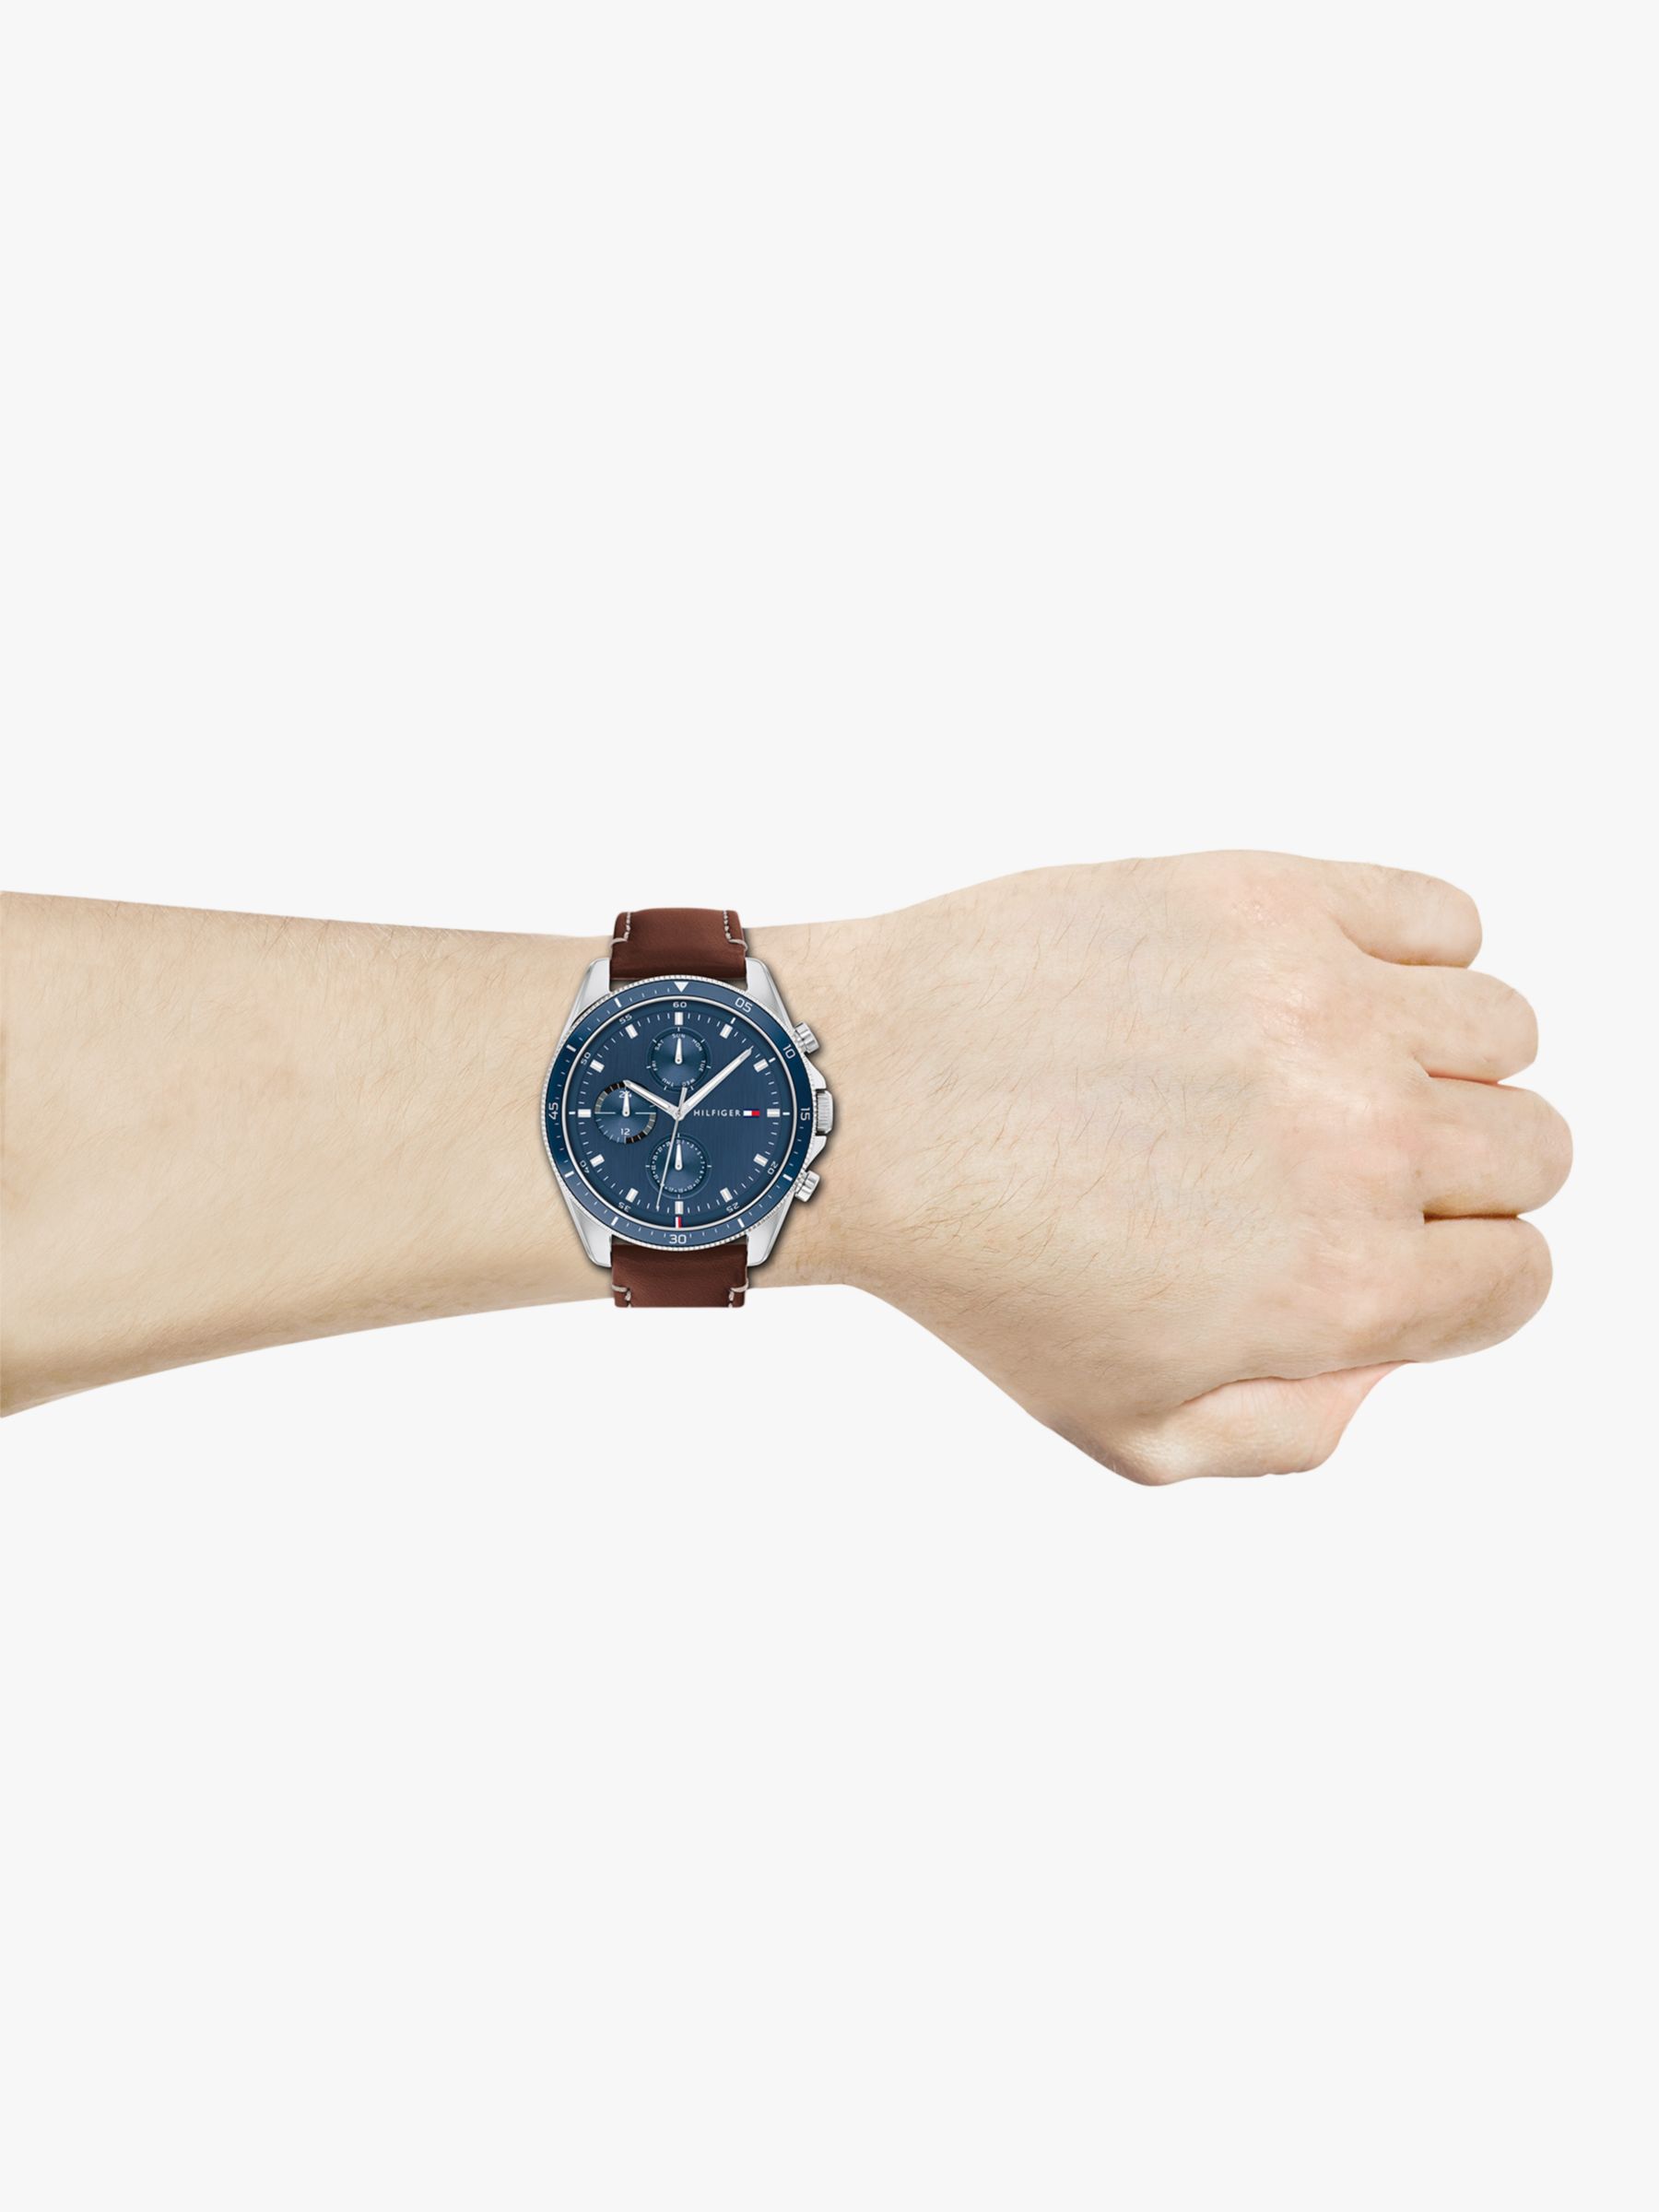 session Stjerne kit Tommy Hilfiger Men's Chronograph Leather Strap Watch, Brown/Blue 1791837 at  John Lewis & Partners